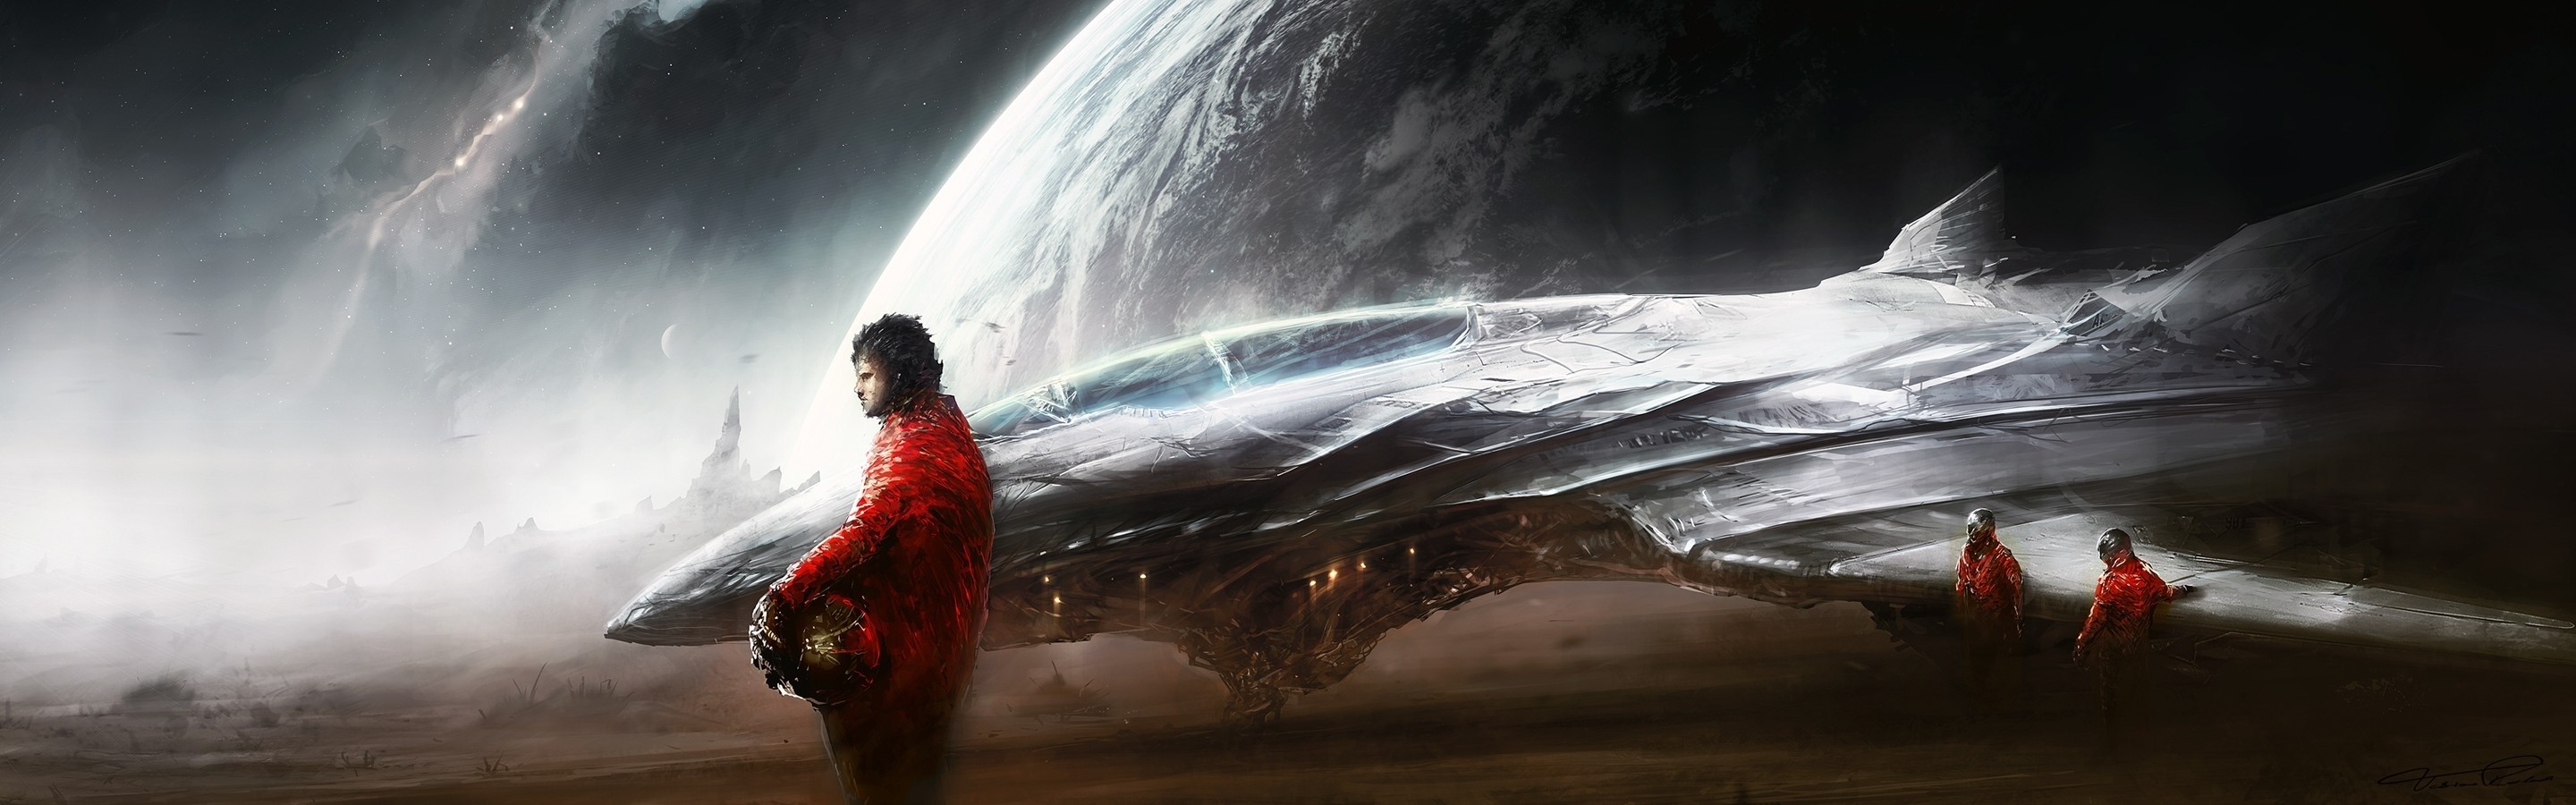 Artwork Digital Art Panoramas Spaceship Planet Futuristic Science Fiction 2880x900